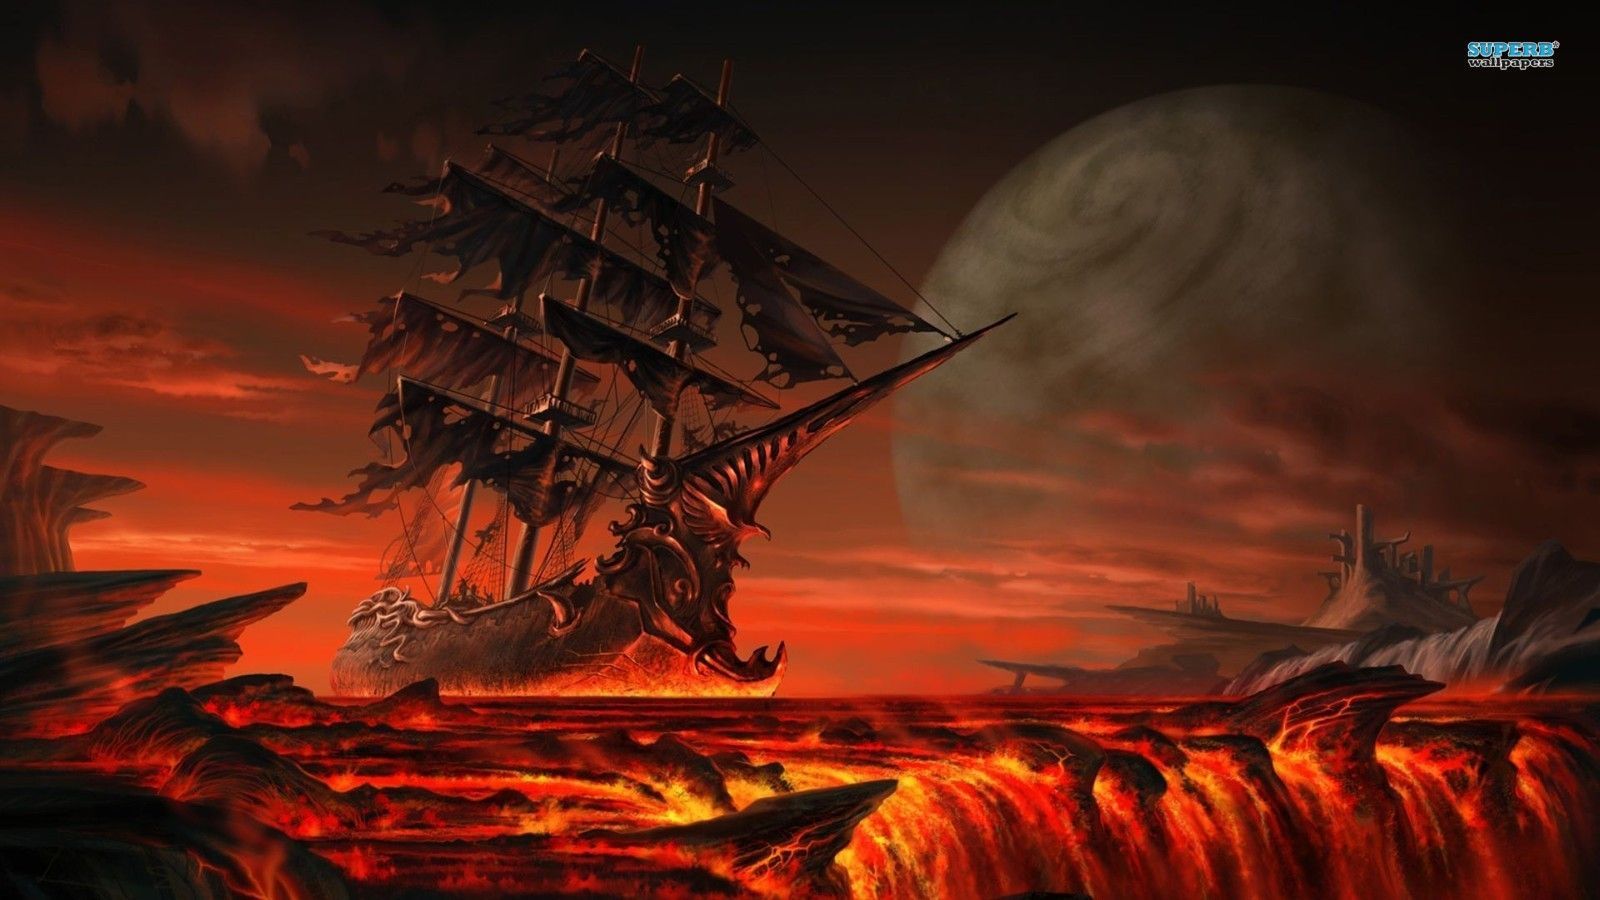 Underworld Pirate Ship - Pirates Wallpaper (38740672) - Fanpop